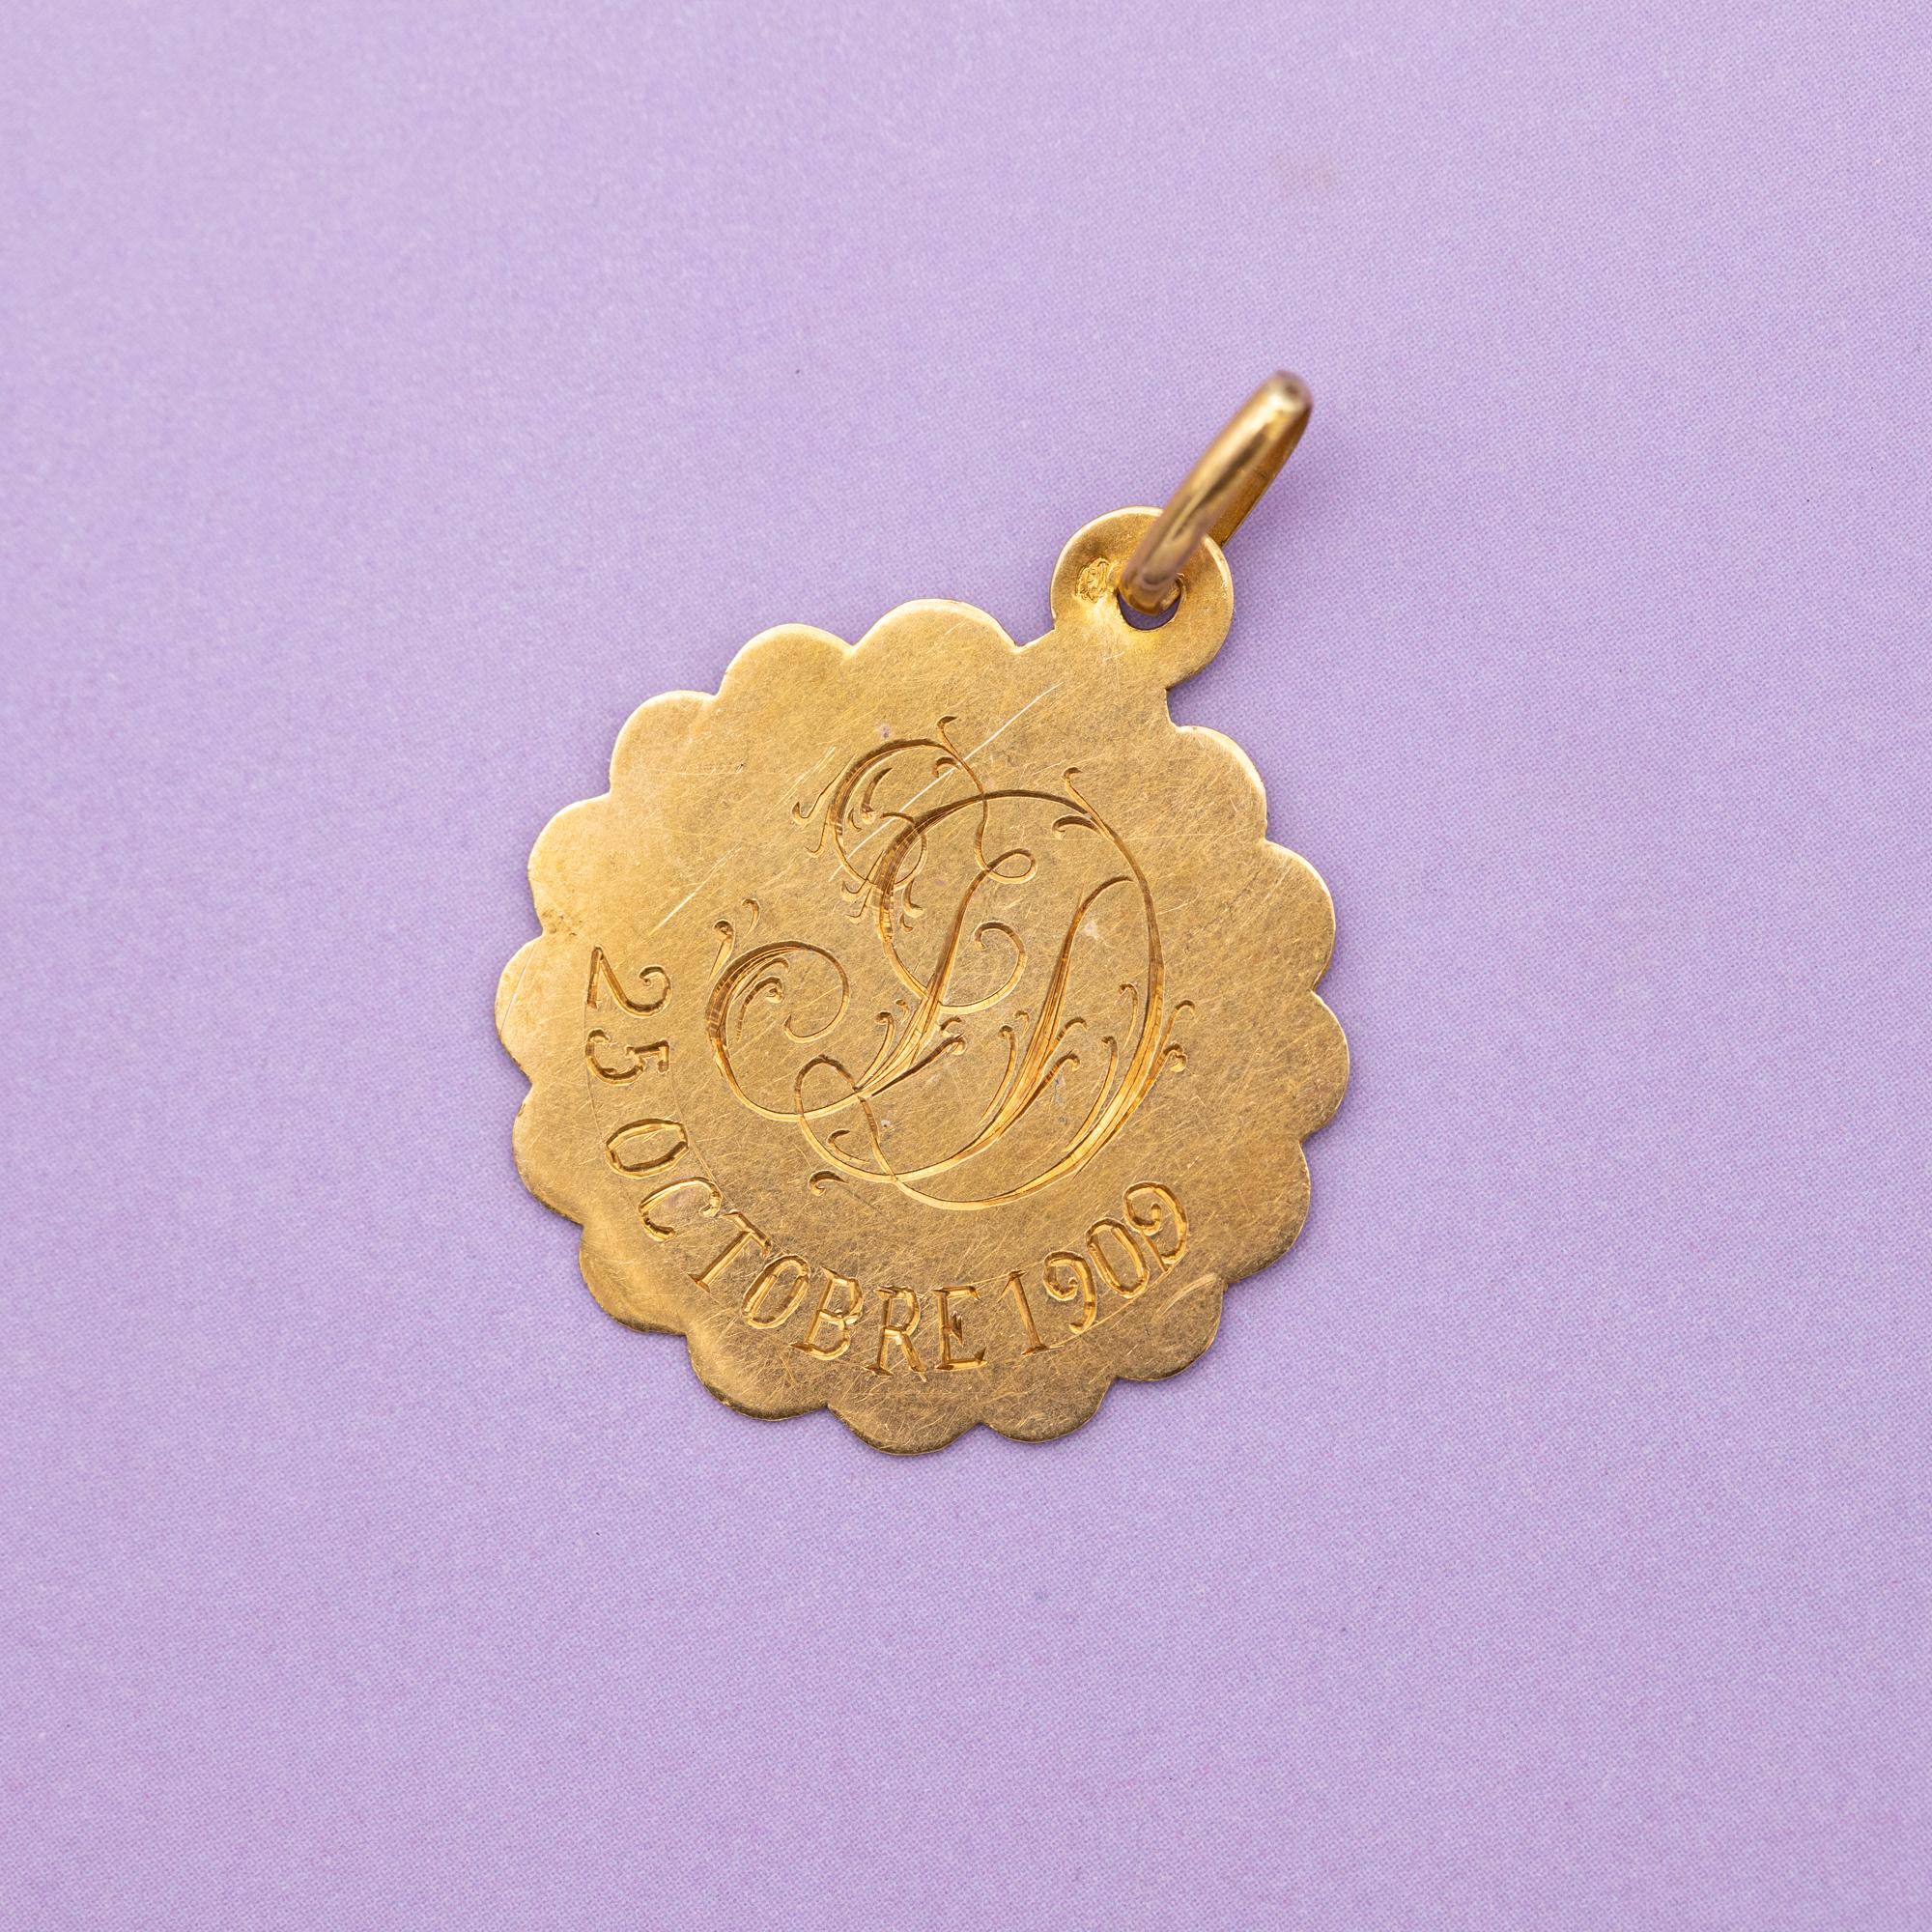 18k gold virgin mary pendant